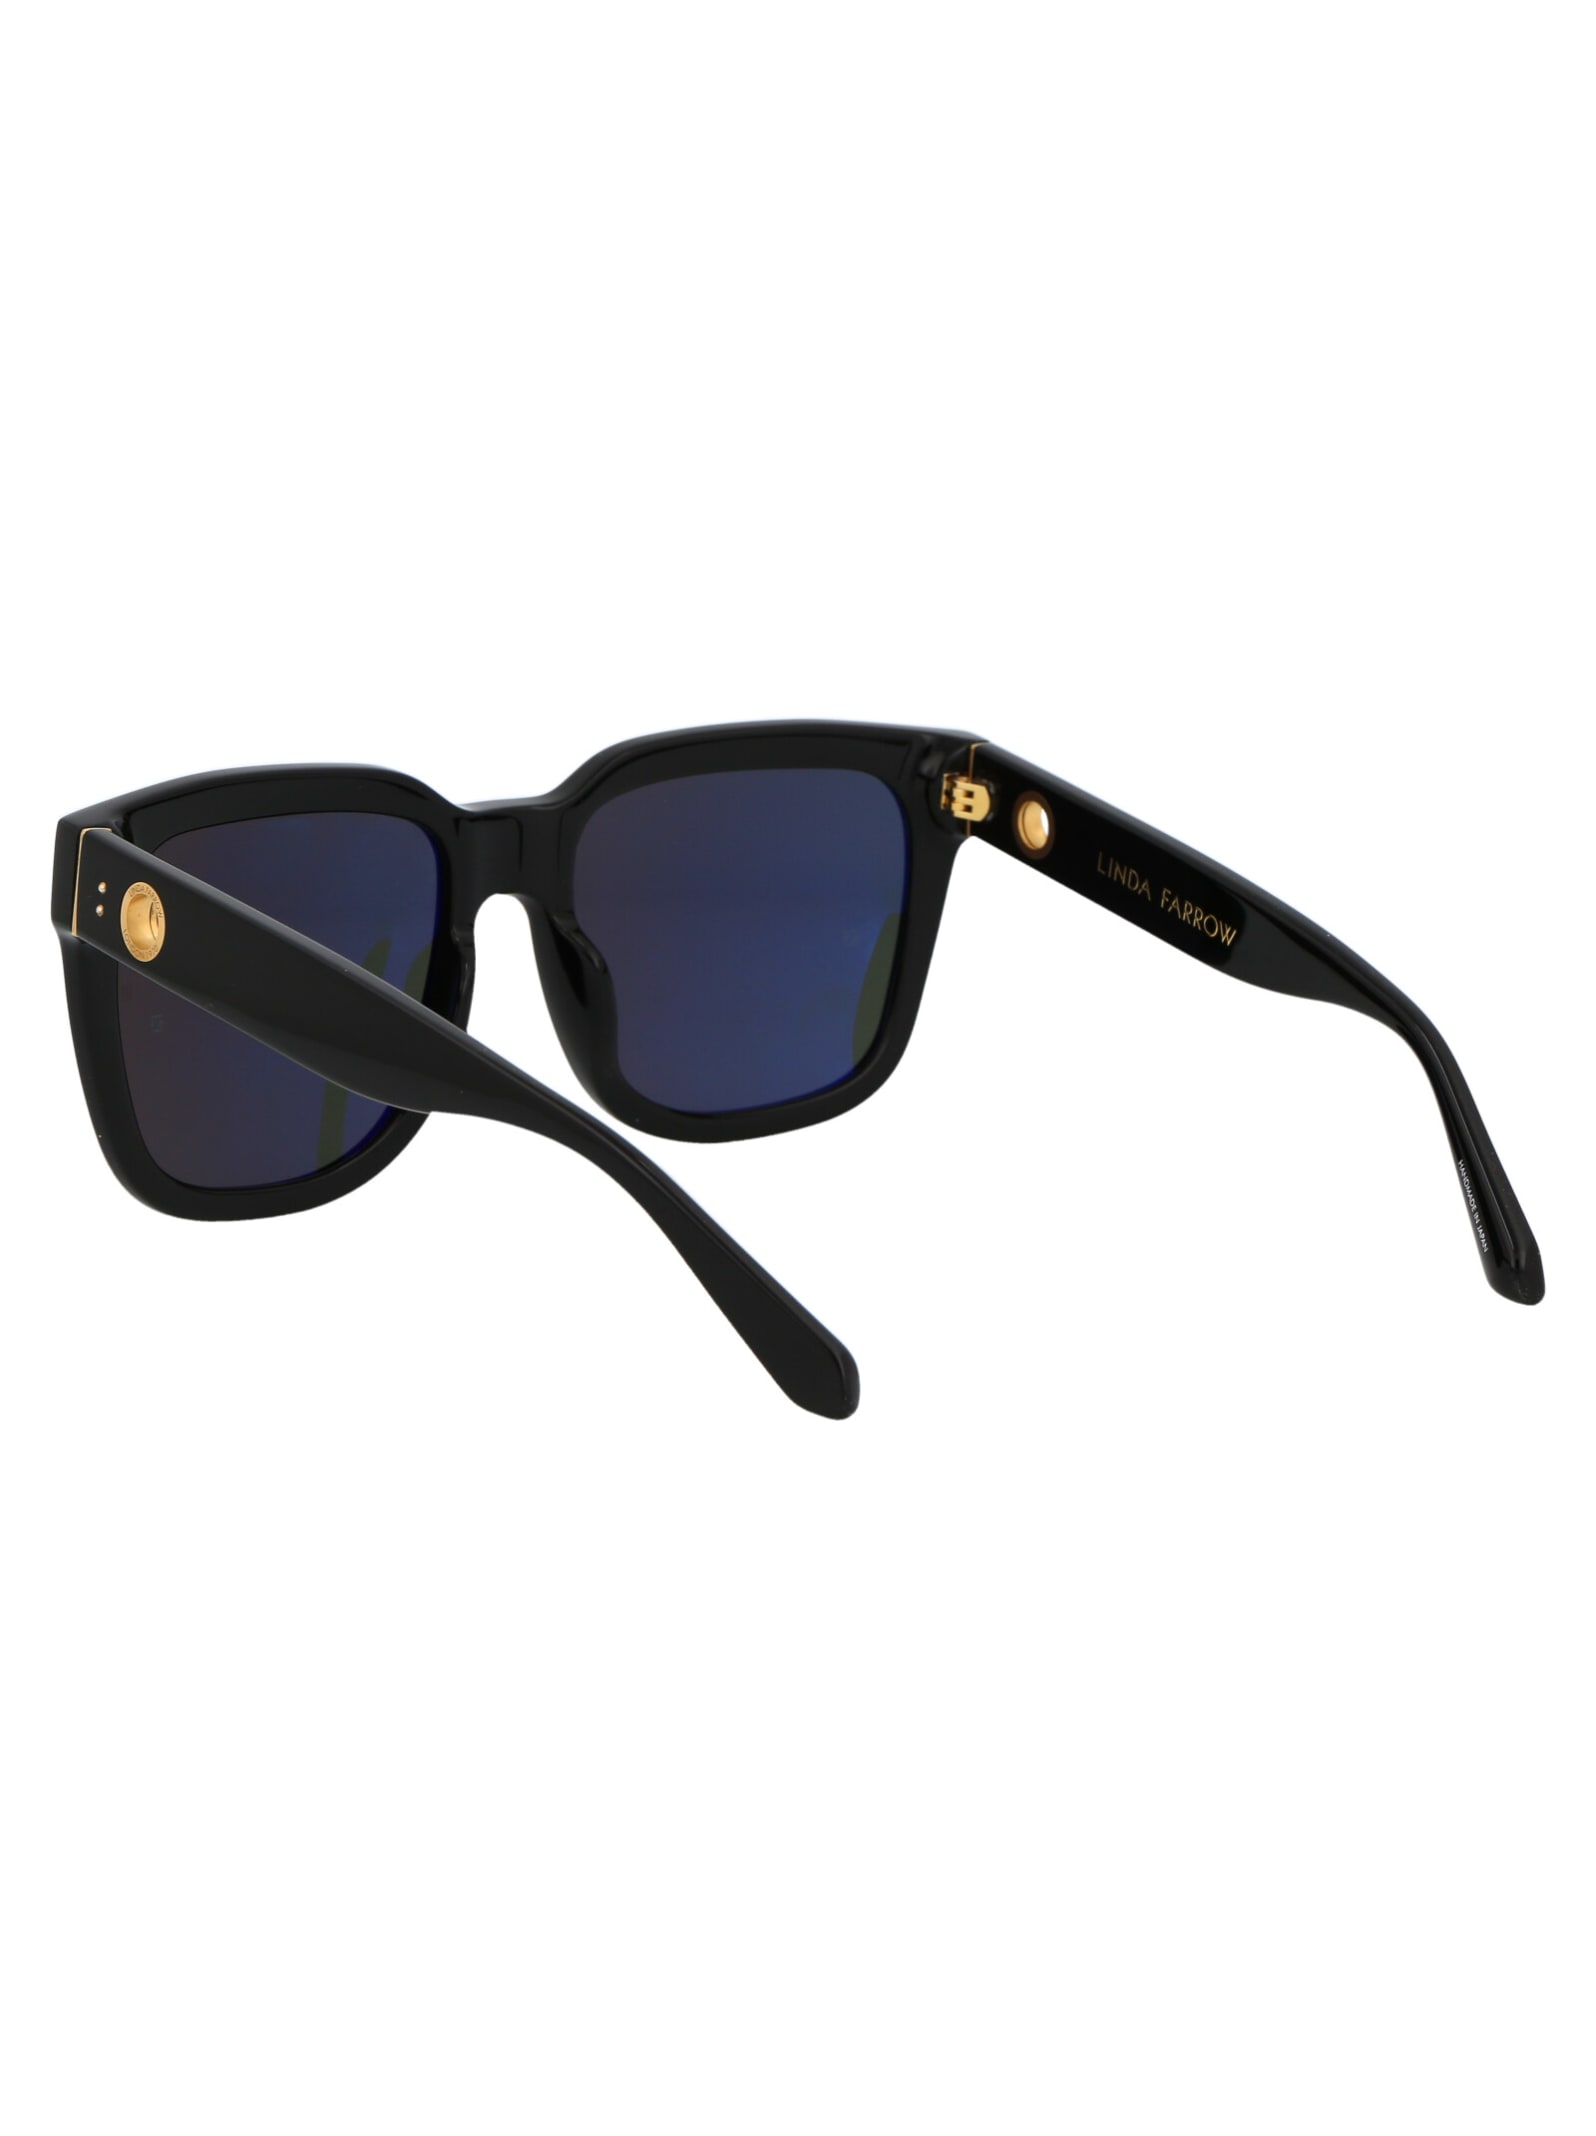 Shop Linda Farrow Freya Sunglasses In Black/yellow Gold/solid Black